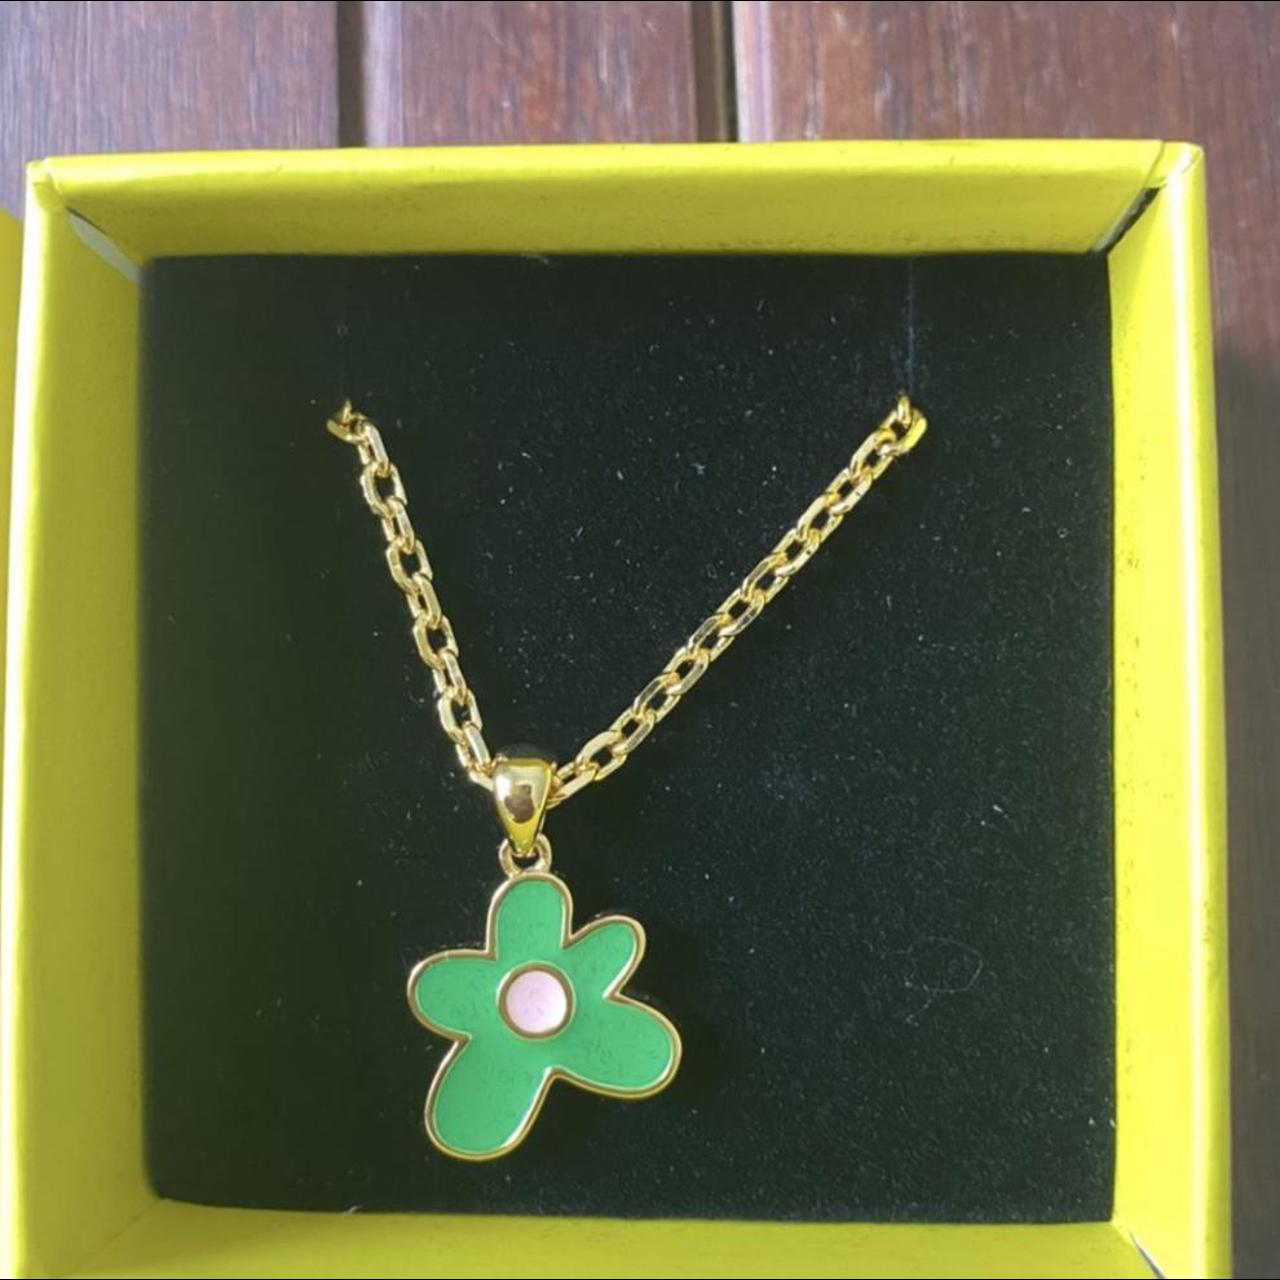 Golf Wang green flower necklace, 18k gold plated